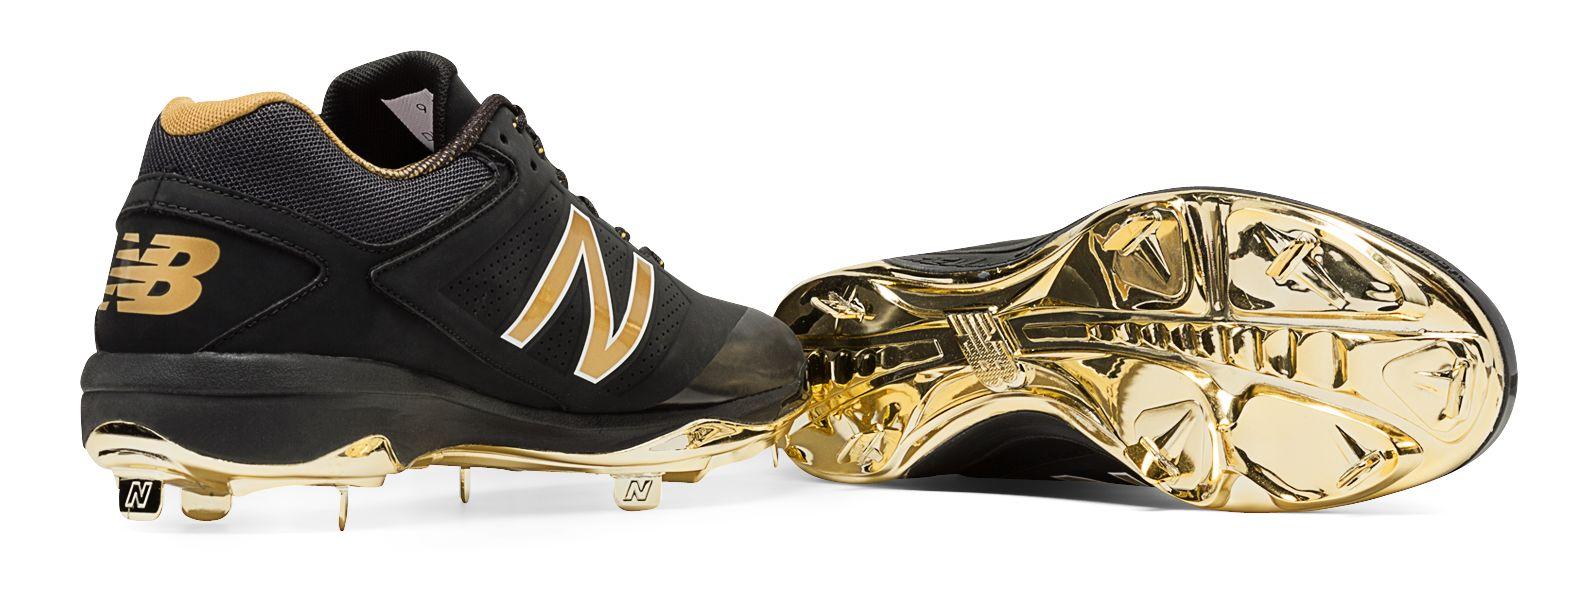 Gold balance. New Balance Gold. New Balance 1906d Metallic Gold. New Balance Black and Gold Shoes. Кроссовки Нью баланс черно золотые.